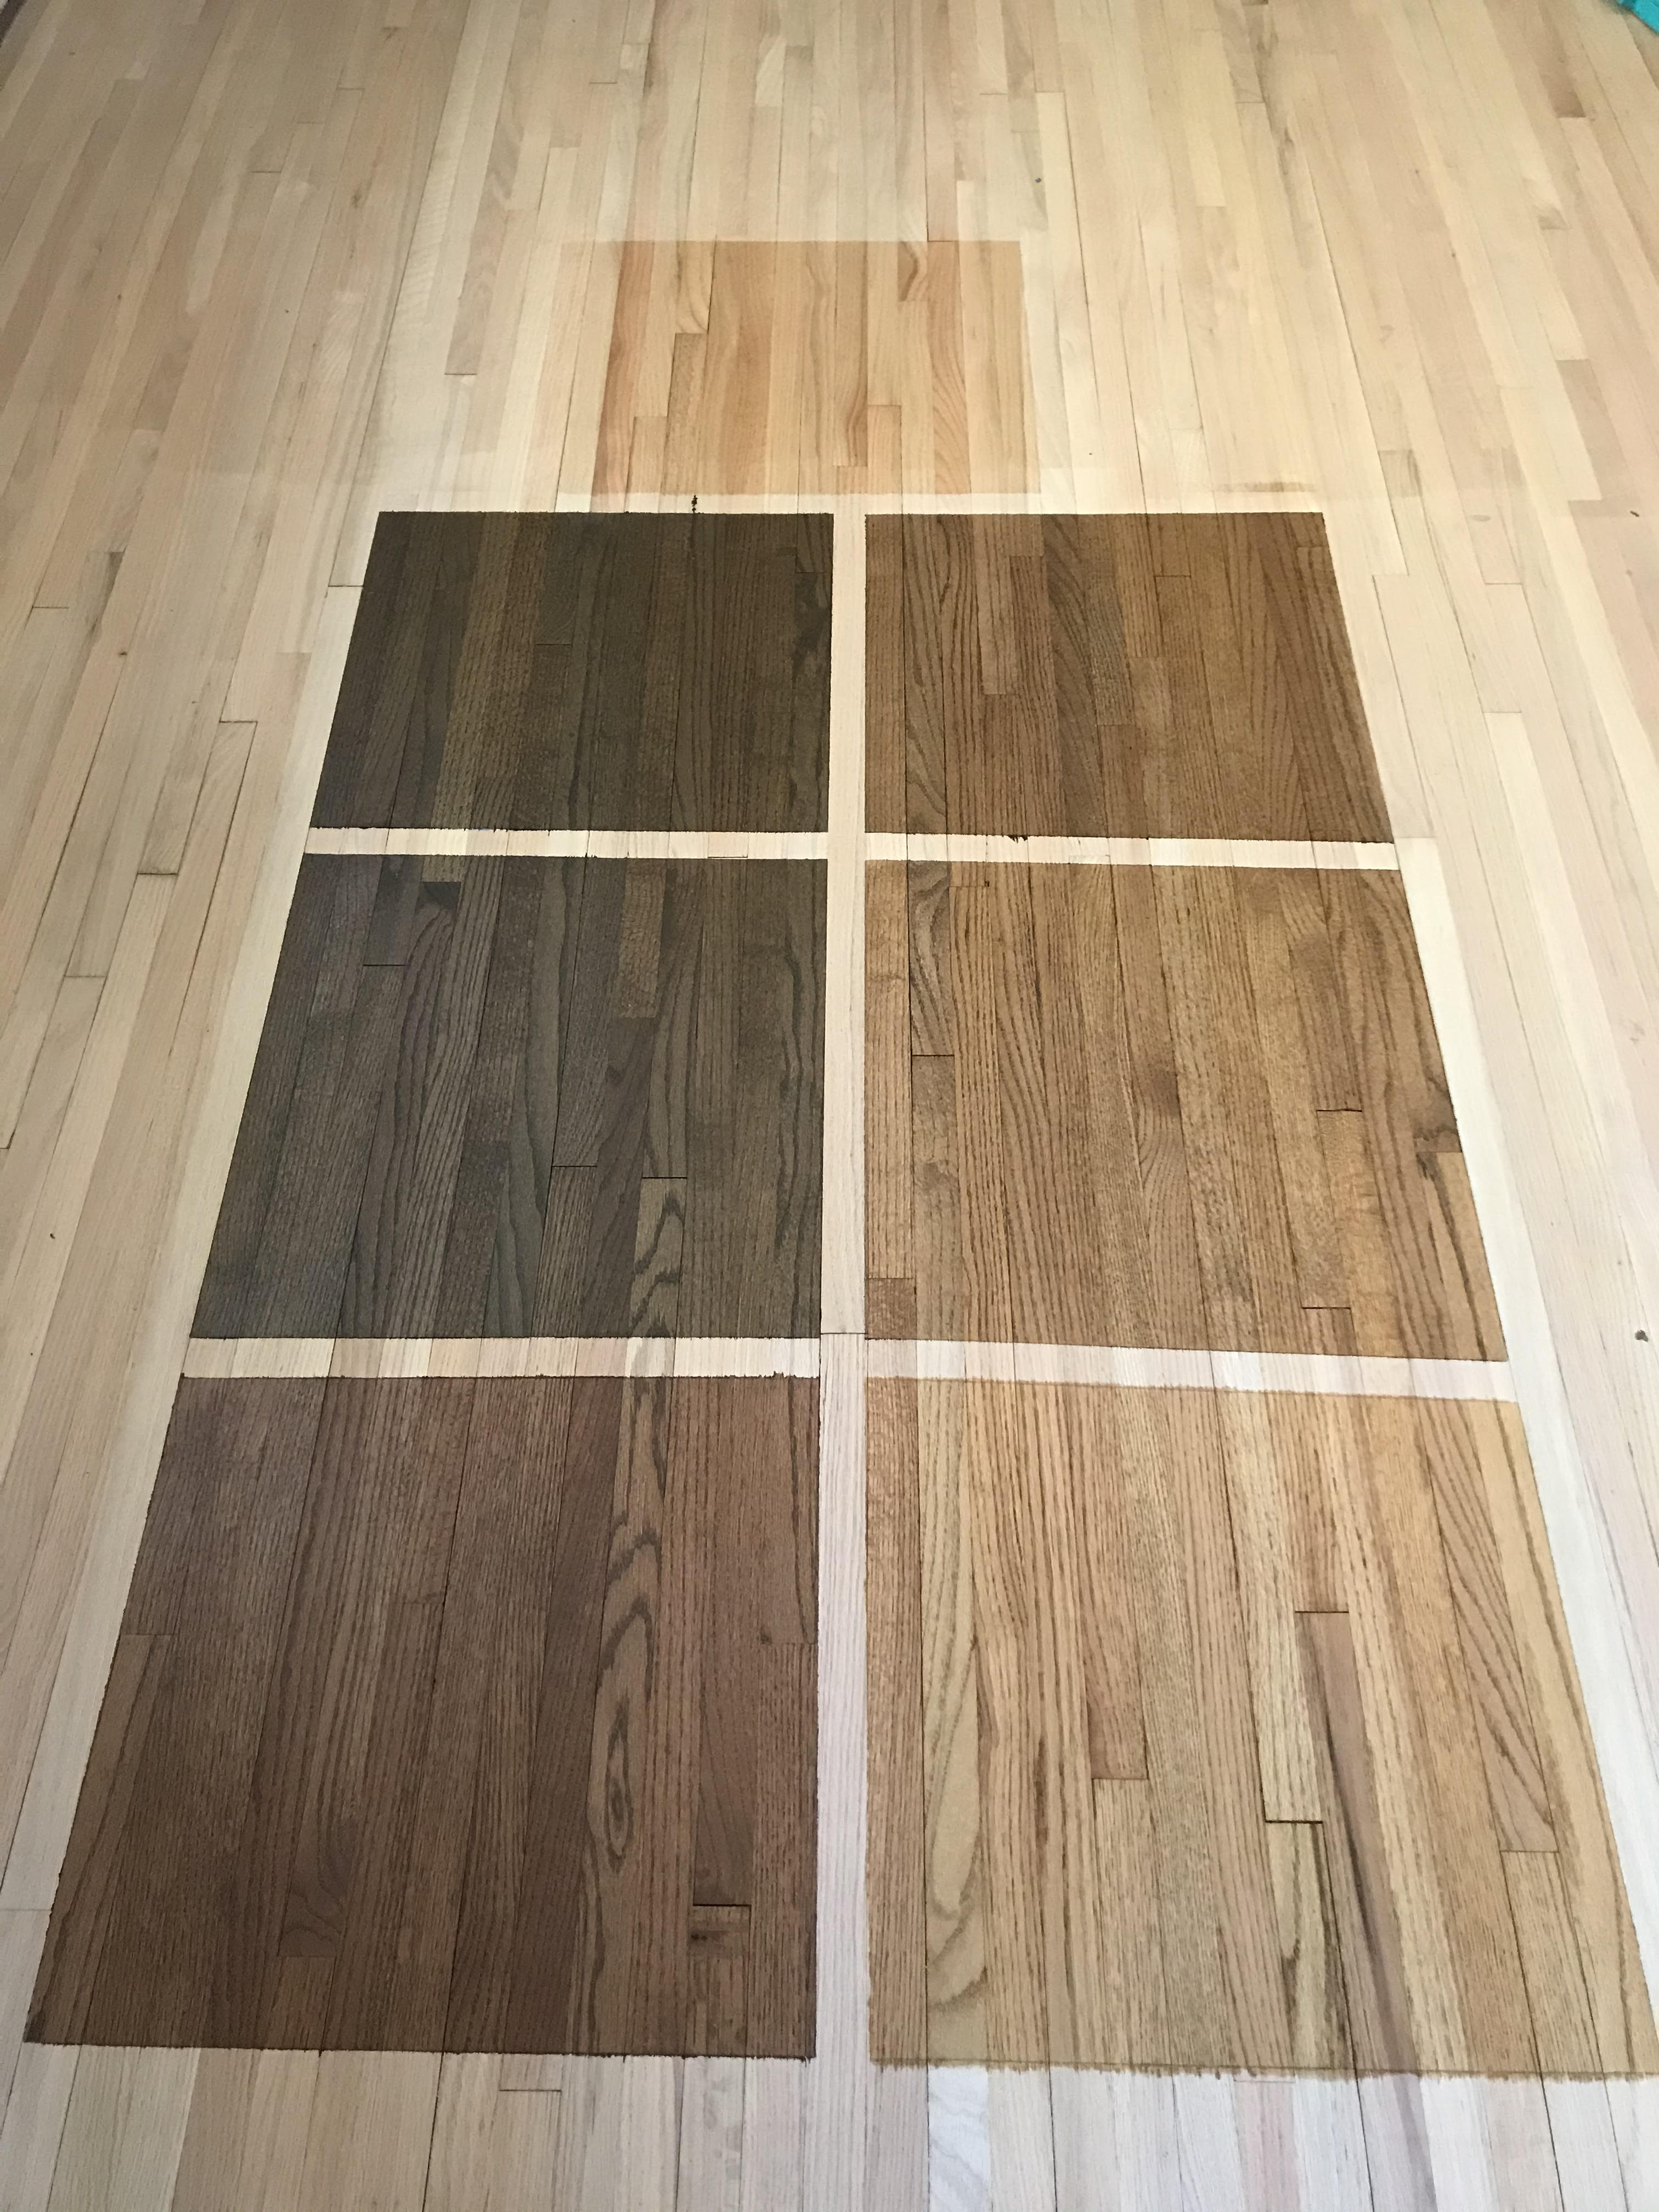 Hardwood Floor Refinishing Ub, Refinish And Restain Hardwood Floors